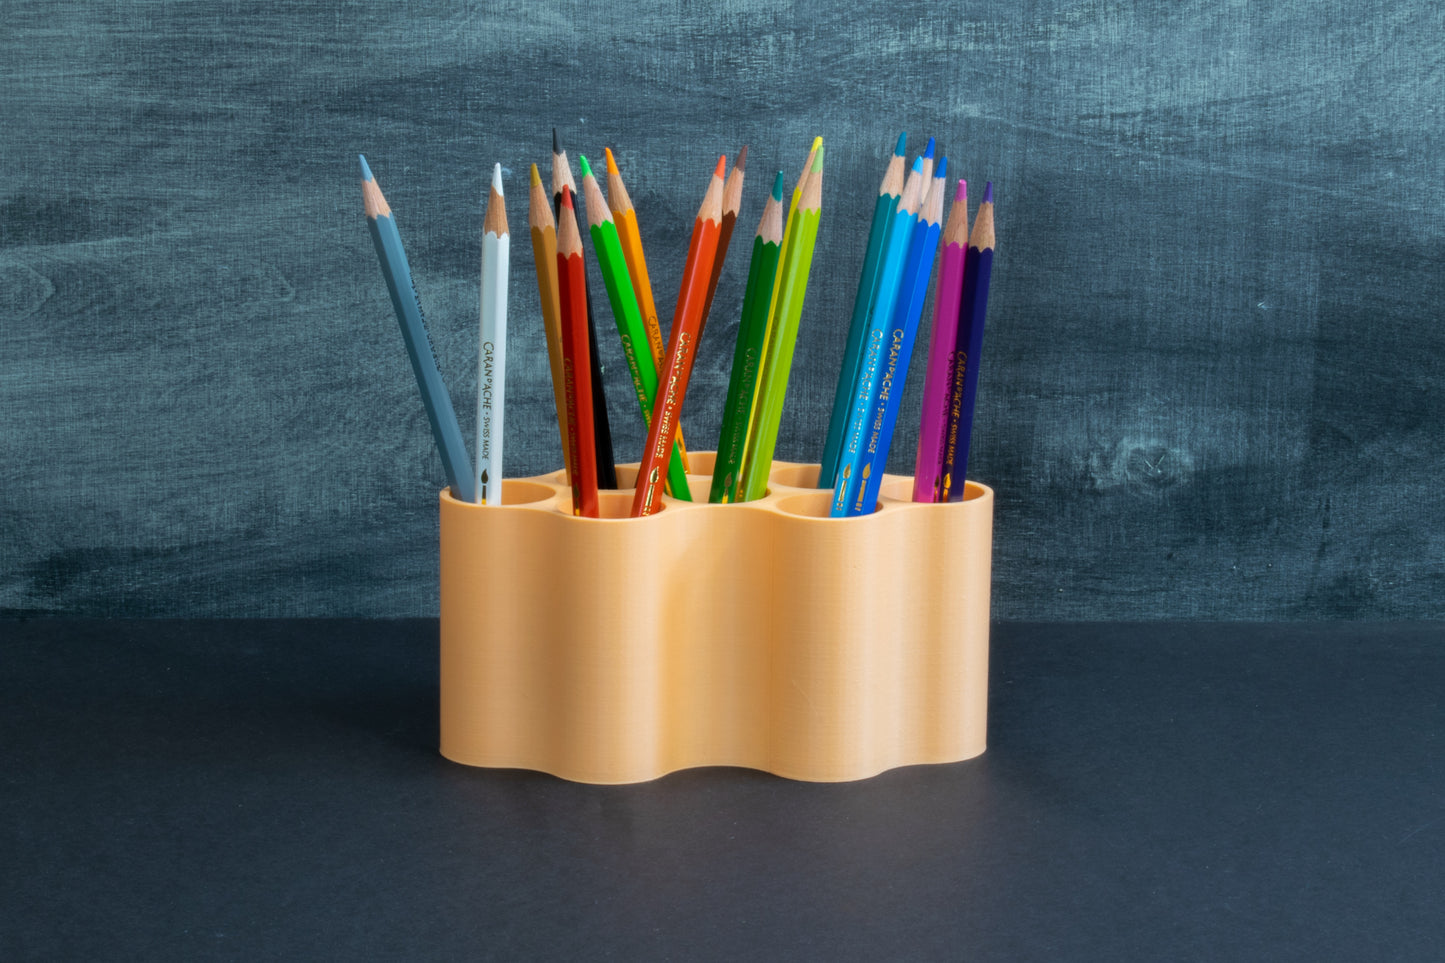 Minimalist Scandinavian Eco-Friendly Pencil Holder with Customizable Geometric Design